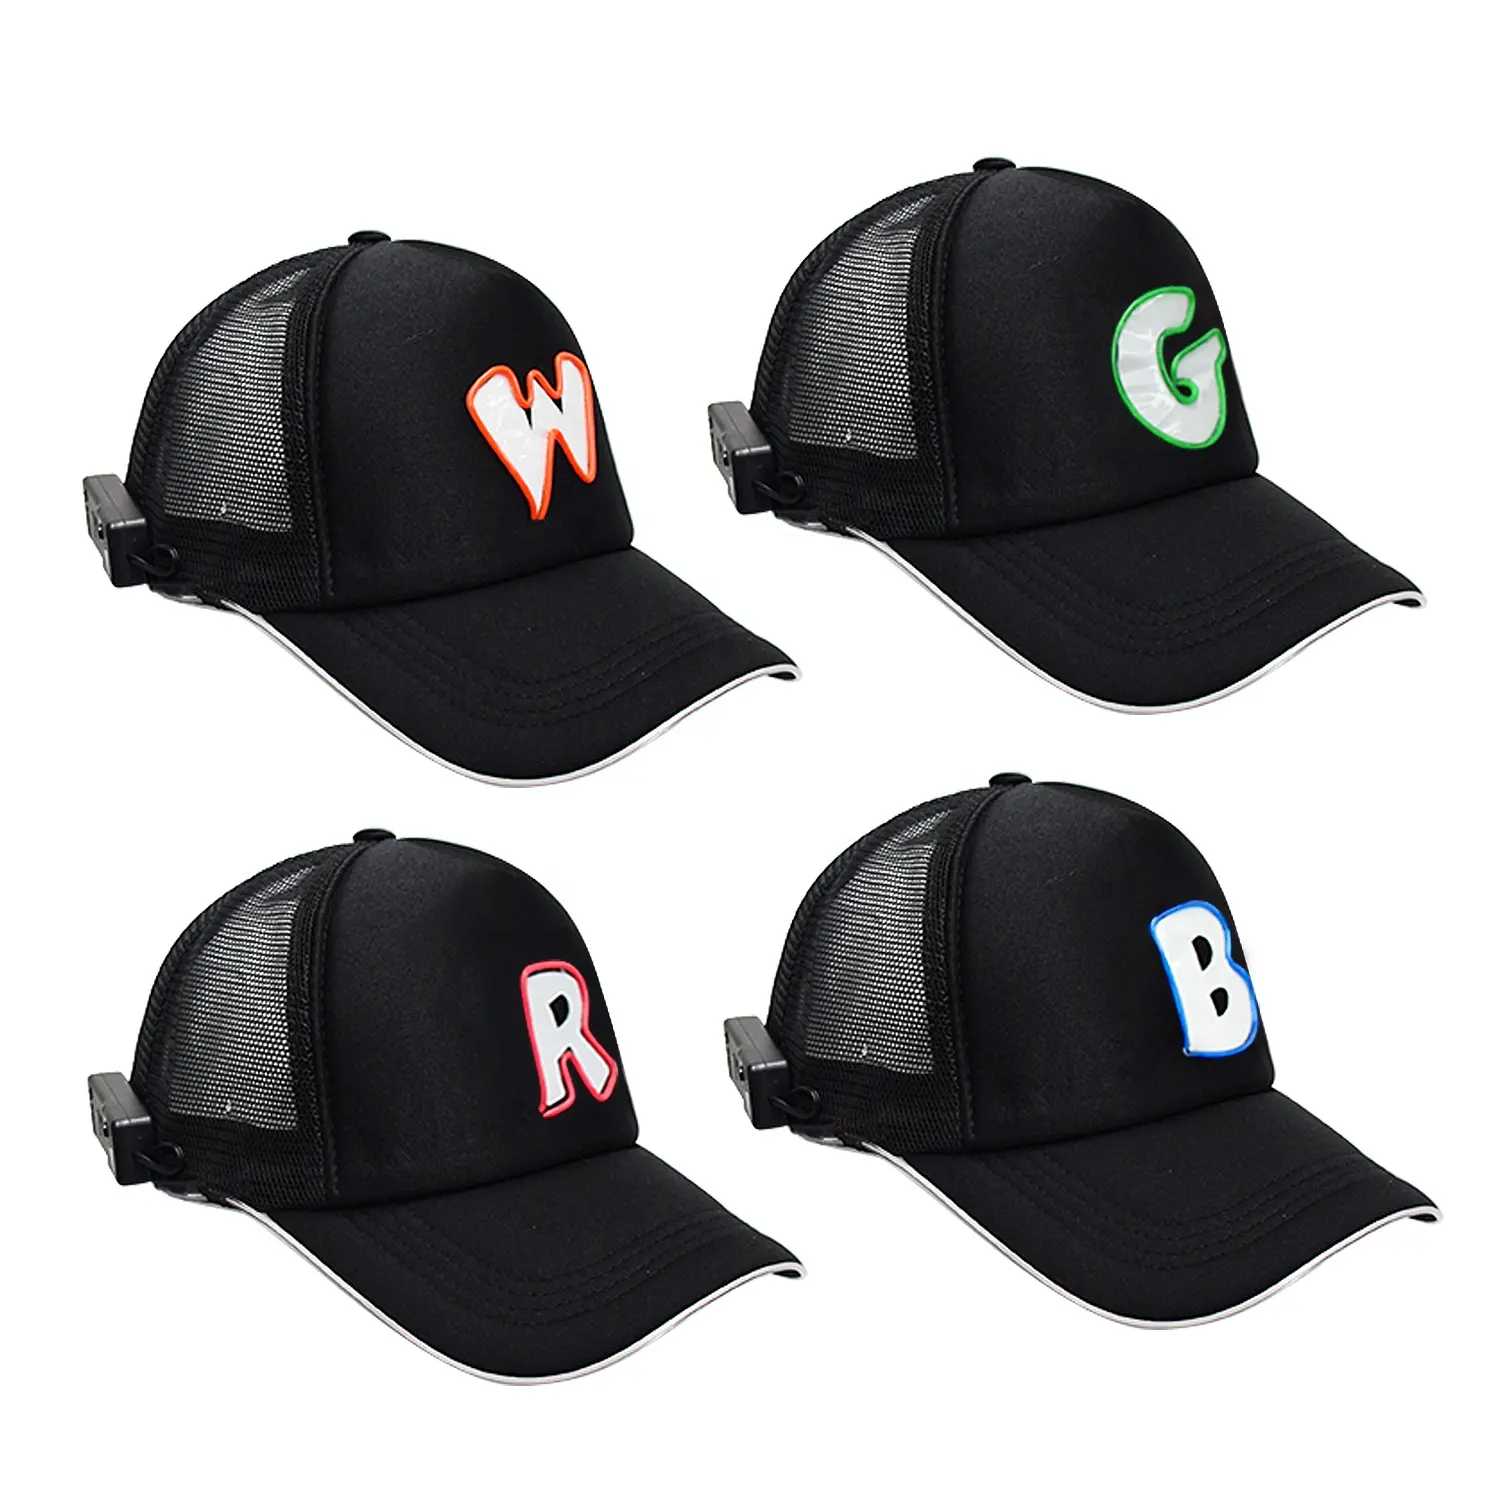 New Design Fashion Adjustable Letter Led Light Sport Baseball Cap With Led Lights Glow In The Dark Hat